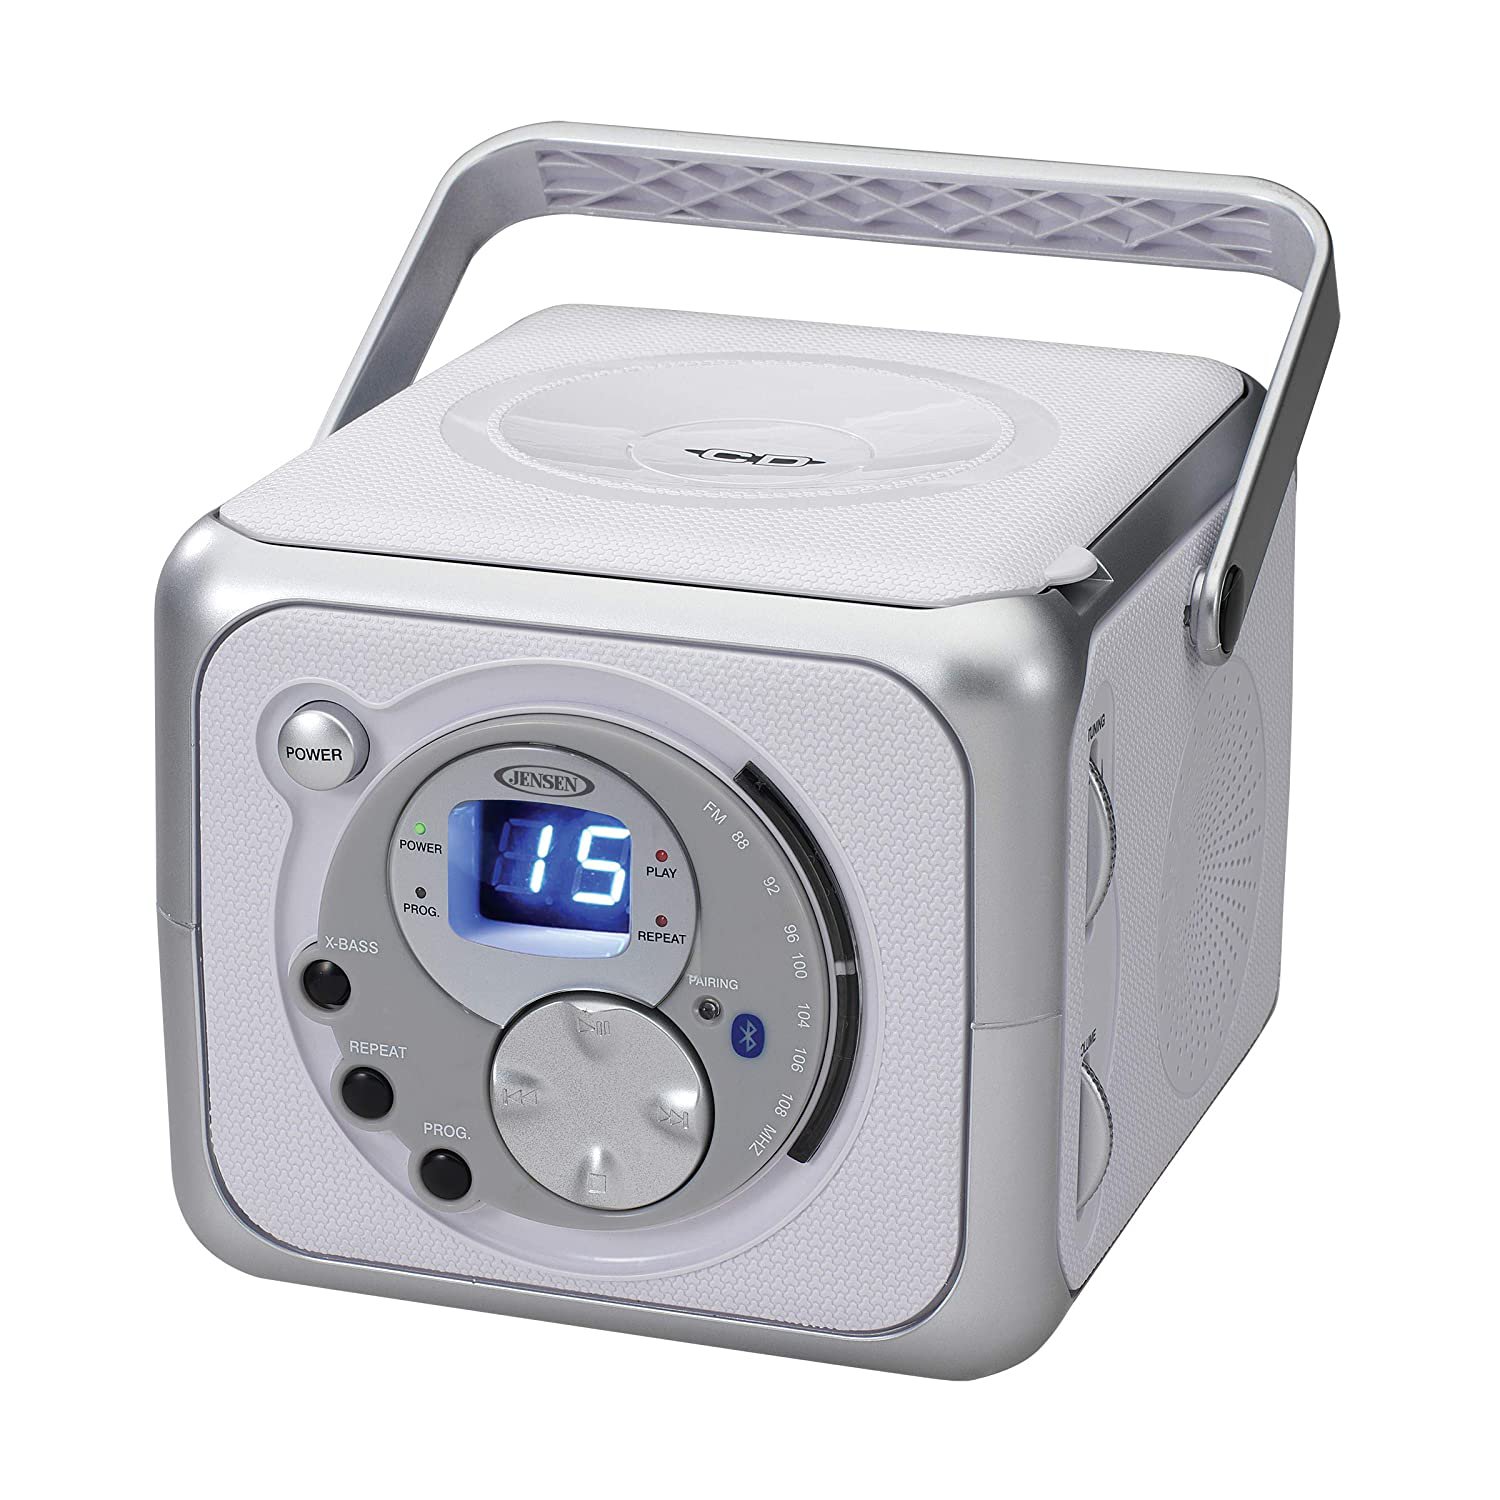 Jensen FM Stereo CD555 Bluetooth Boombox, Silver, 7.00 x 9.75 x 6.00 inches